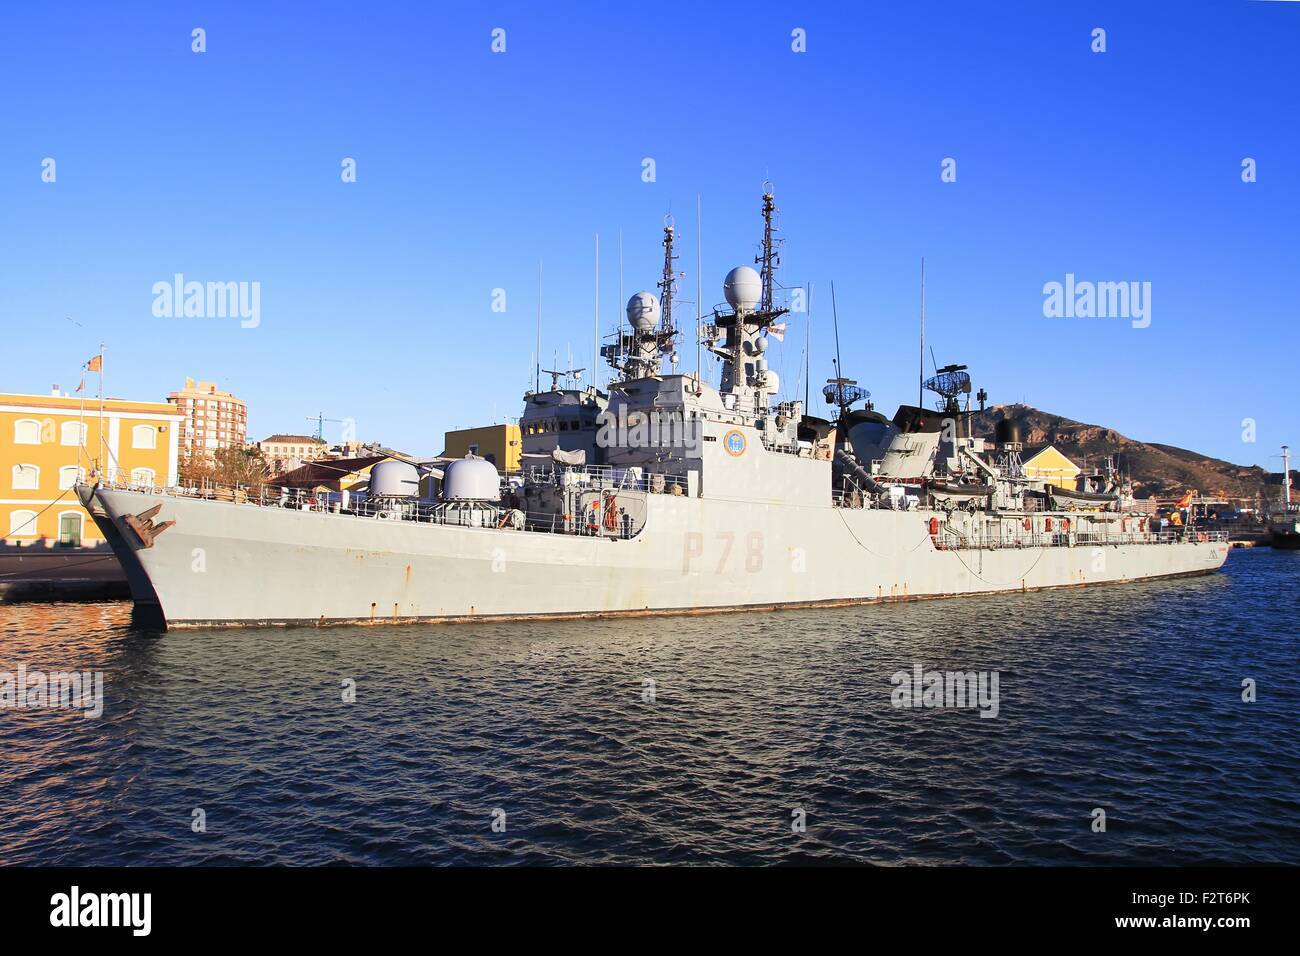 Spanish warship docked Stock Photo